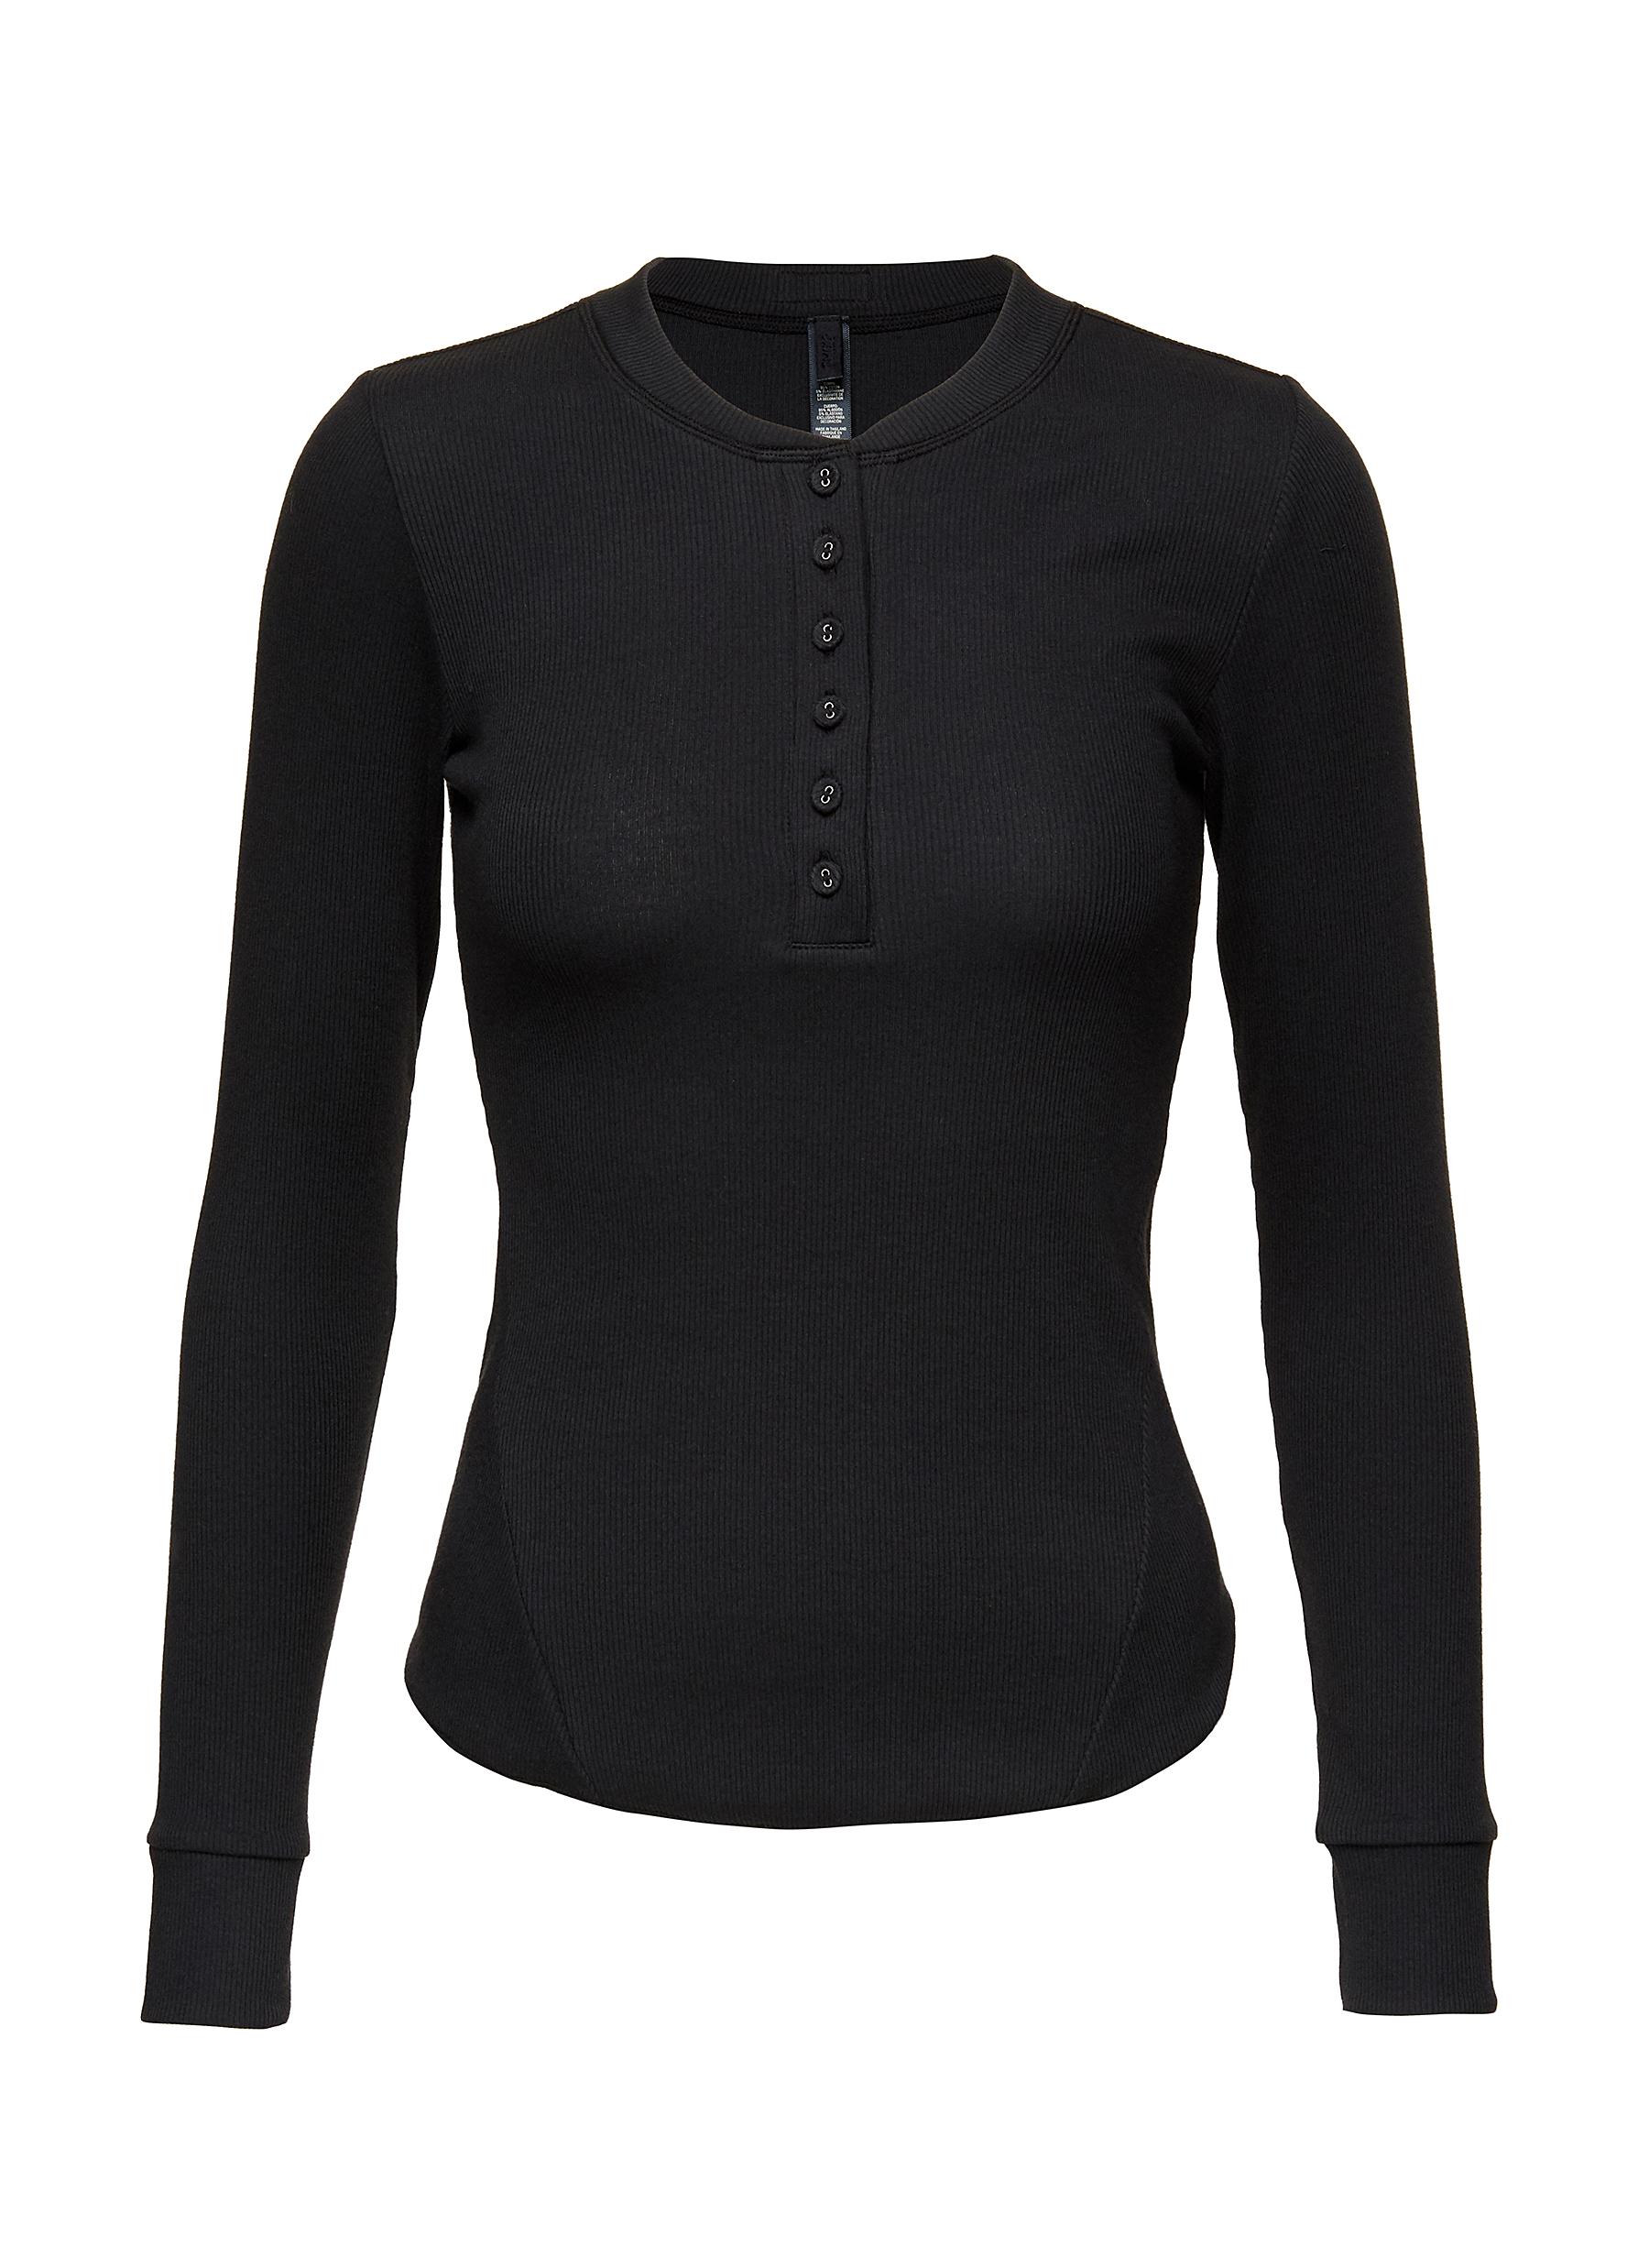 Skims Black Cotton 2.0 Long Sleeve T-shirt In Light Heather Grey